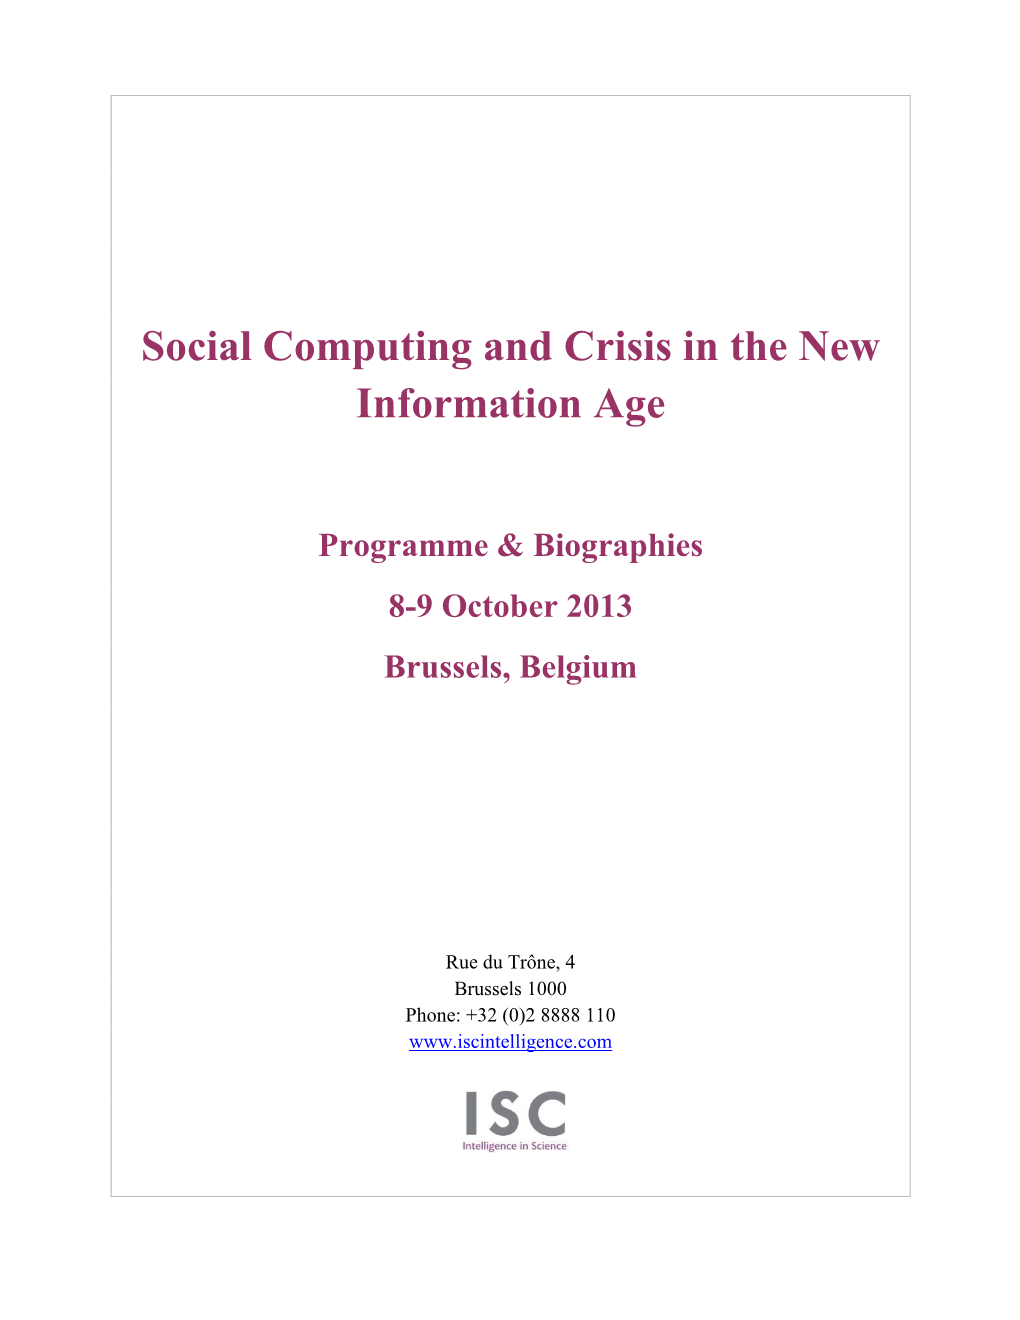 Social Computing Programme